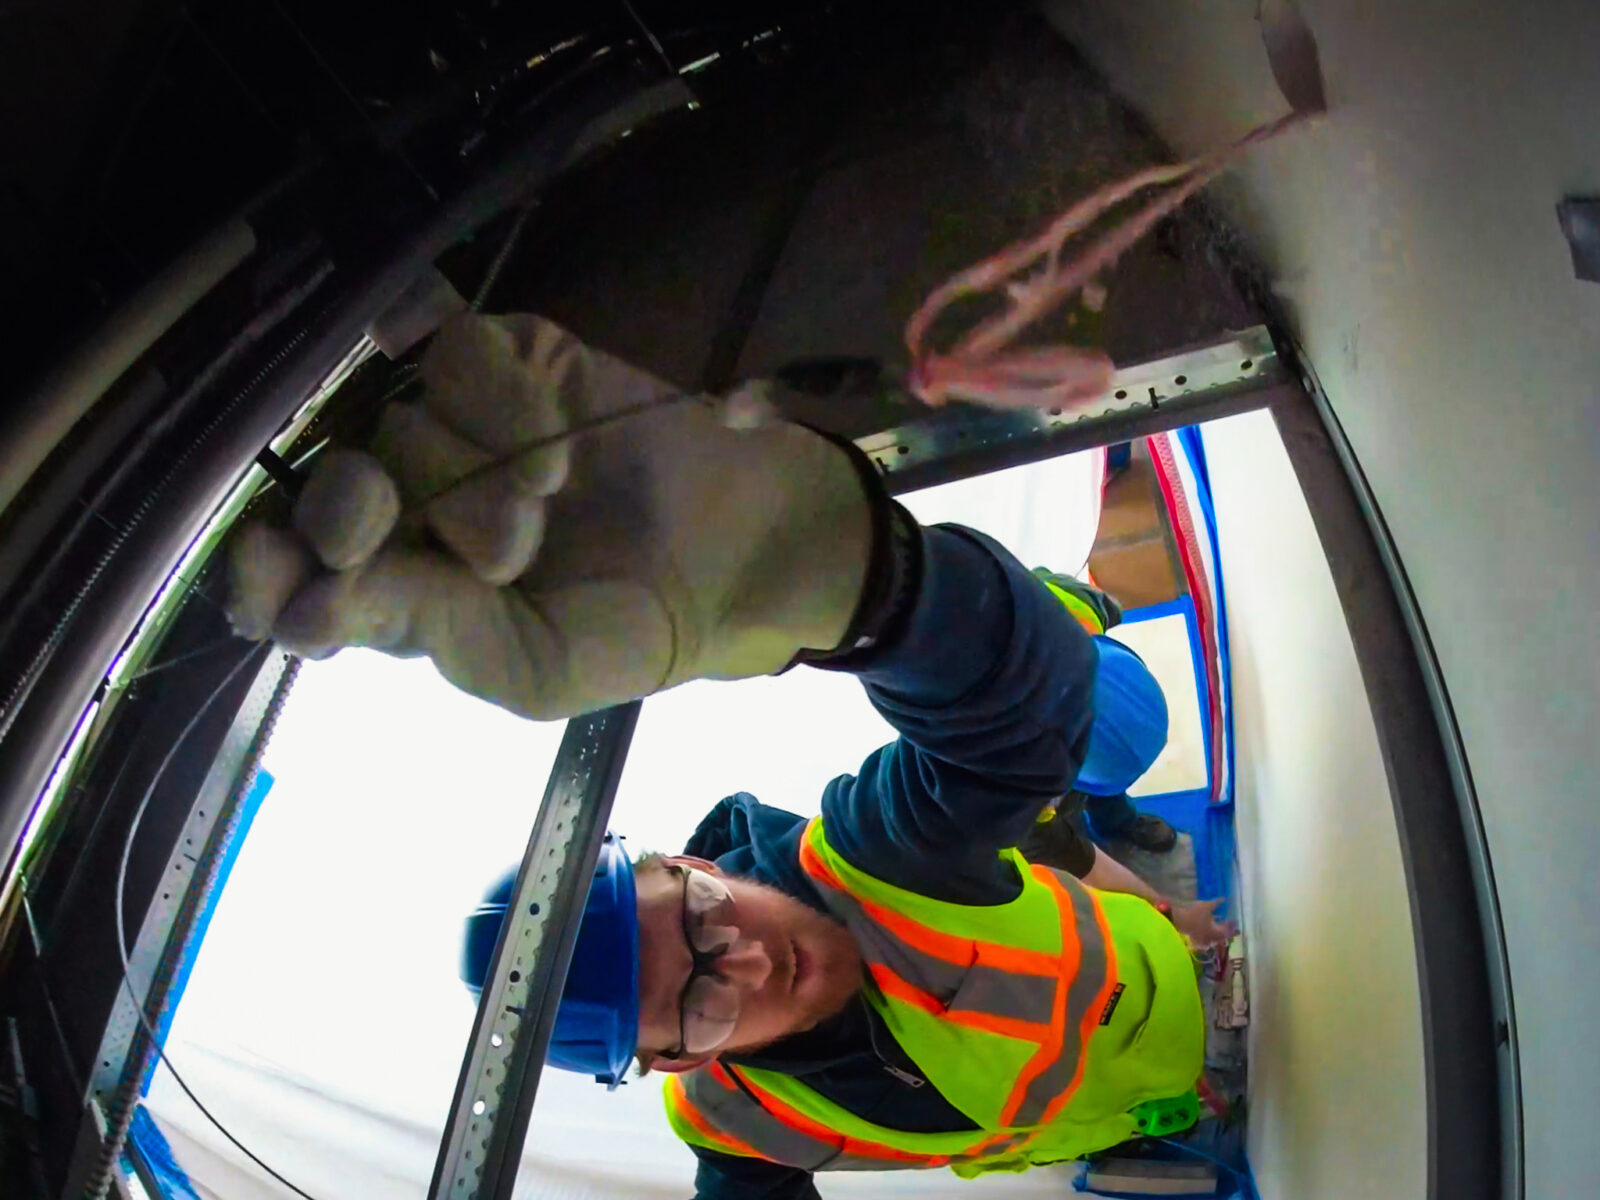 Construction worker adjusting ceiling cables